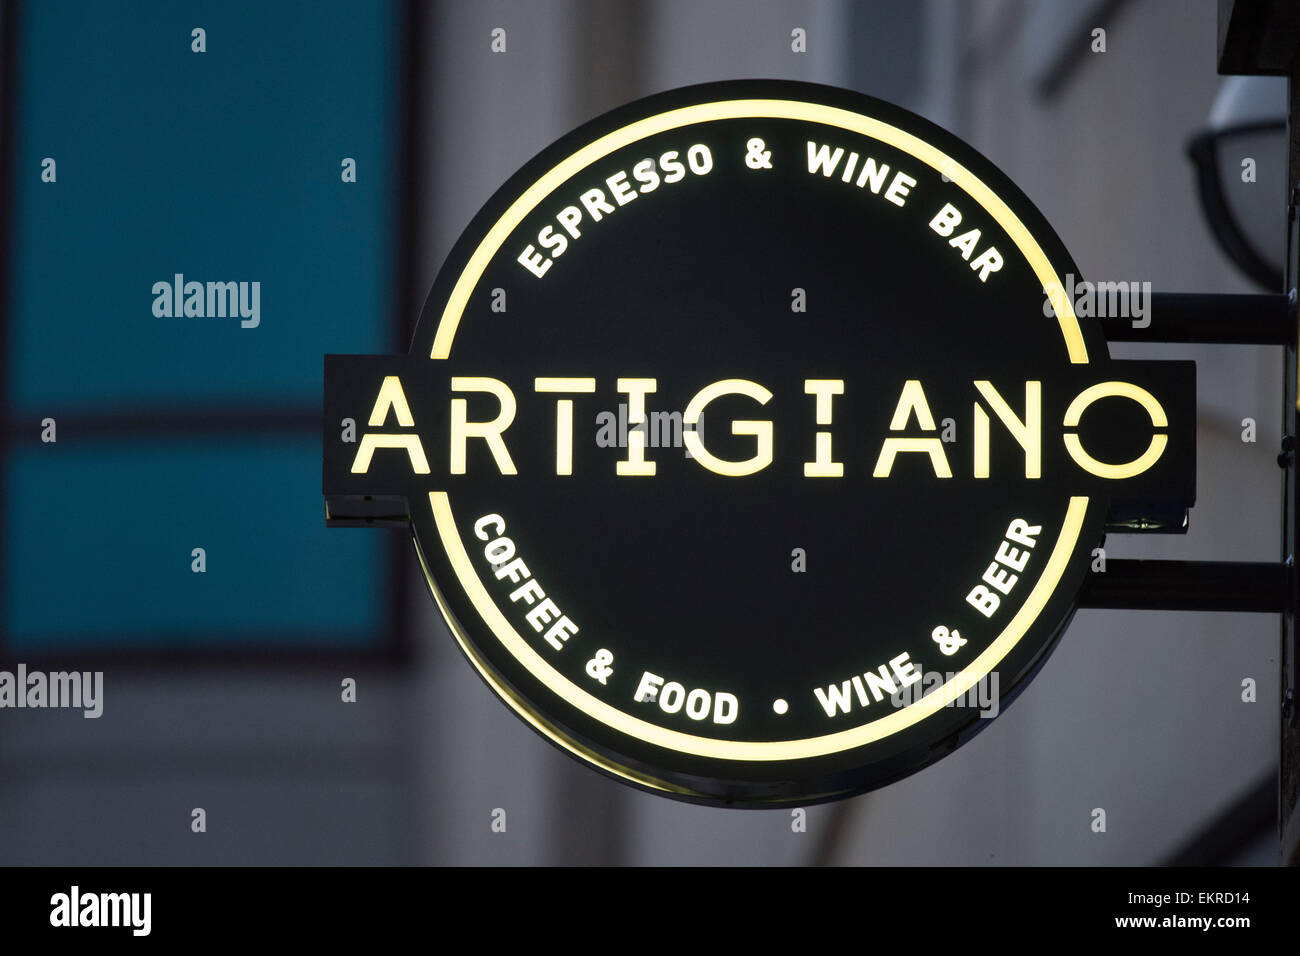 Artigiano Espresso und Wein Bar. Stockfoto